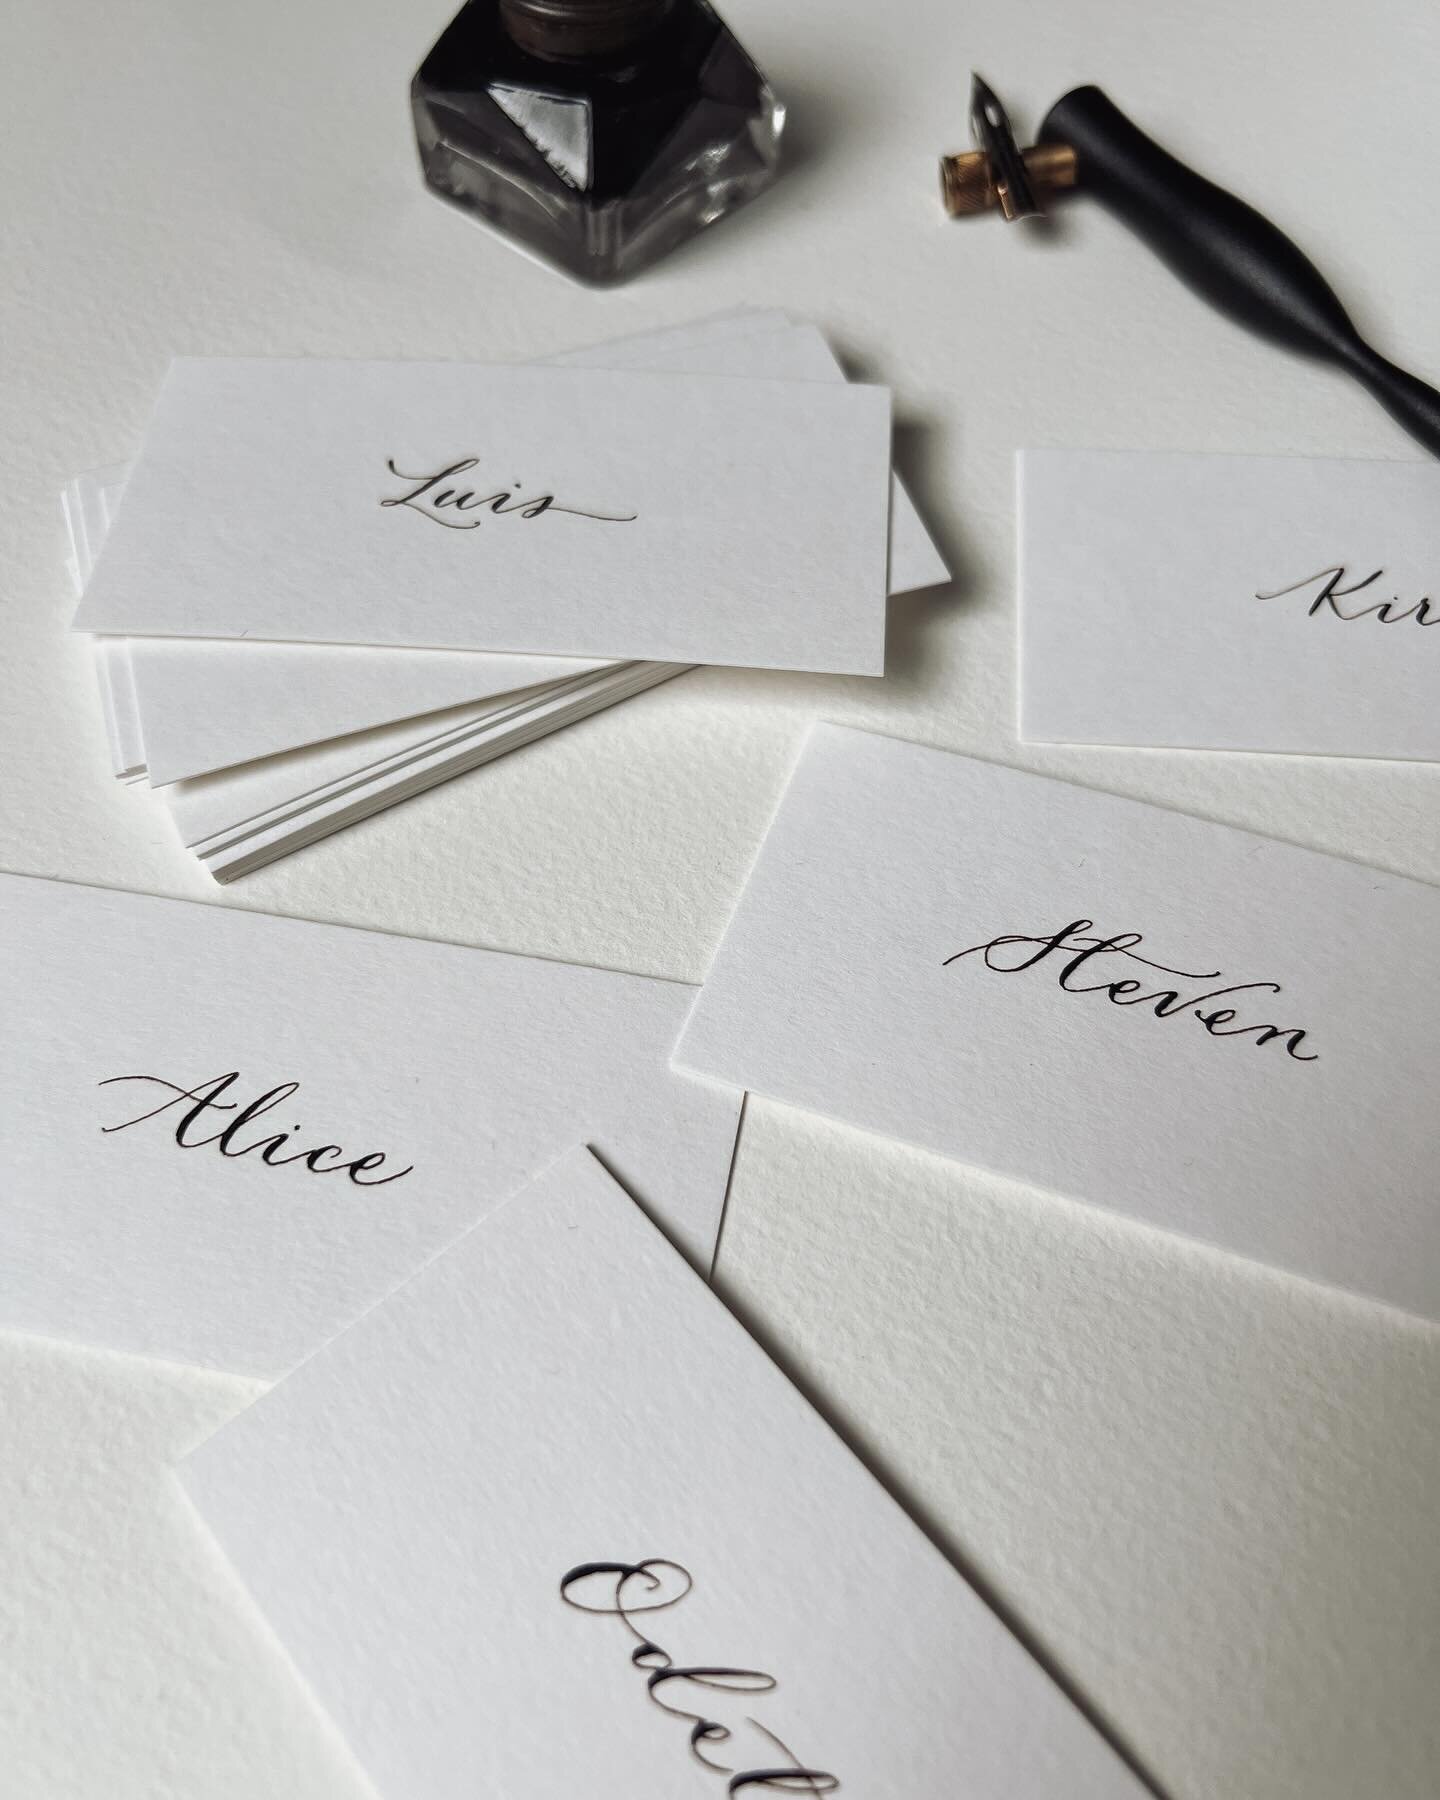 {Placecards} Understated elegance.
.
.
.
#placecards #eventstationery #tablestyling #quietluxury #eventplanning #calligraphy #weddingcalligraphy #dottheiatelier